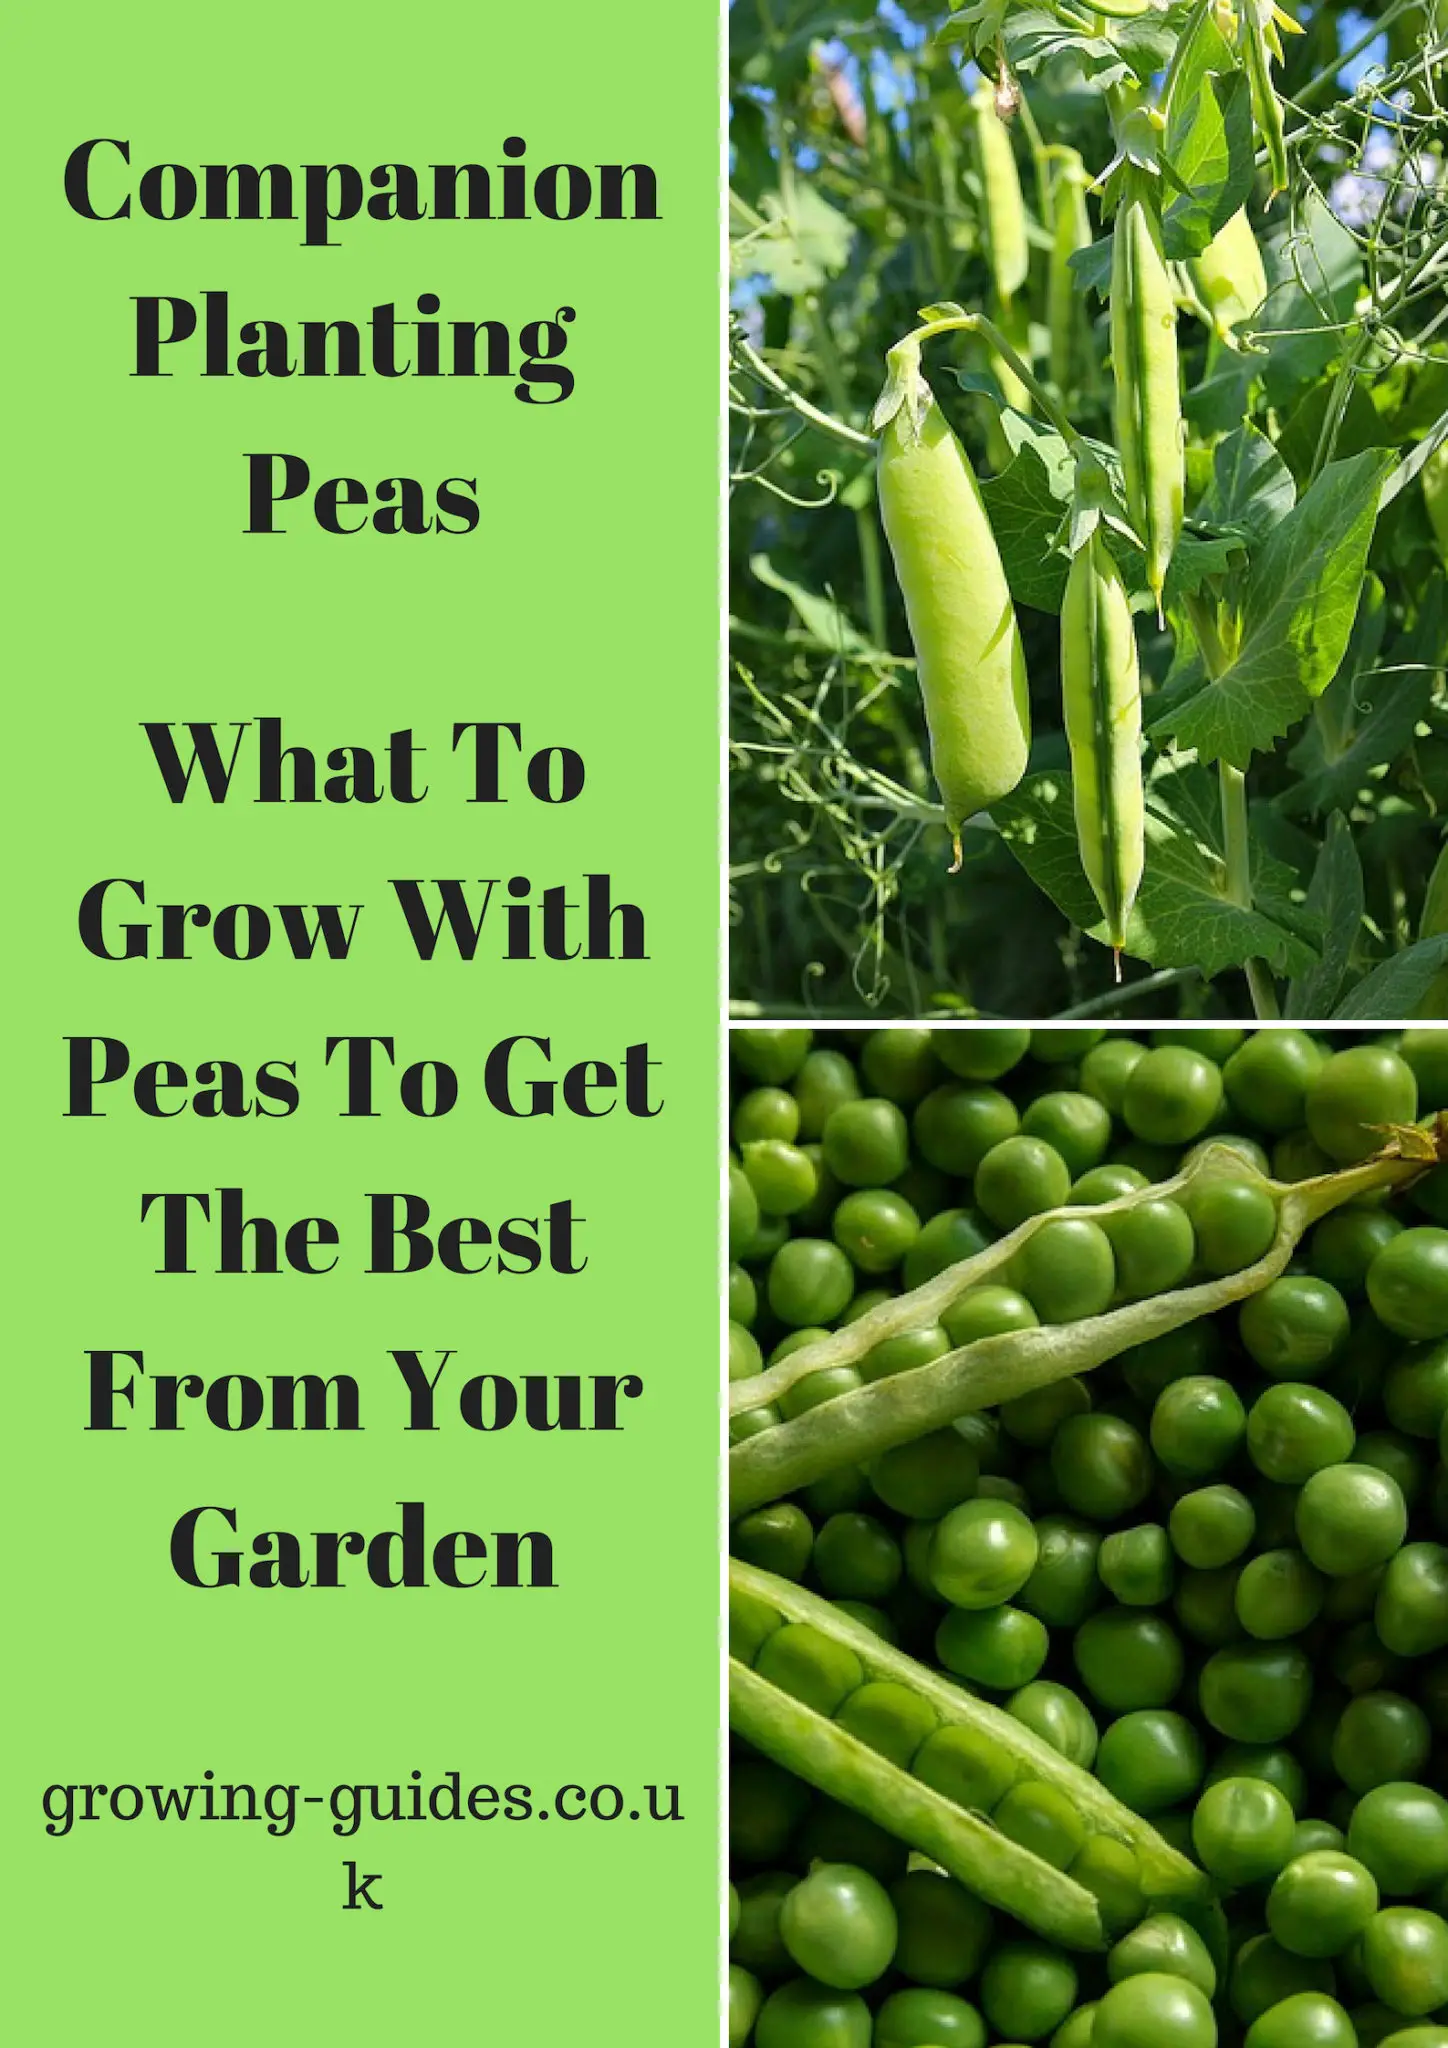 Image of Corn and peas companion planting